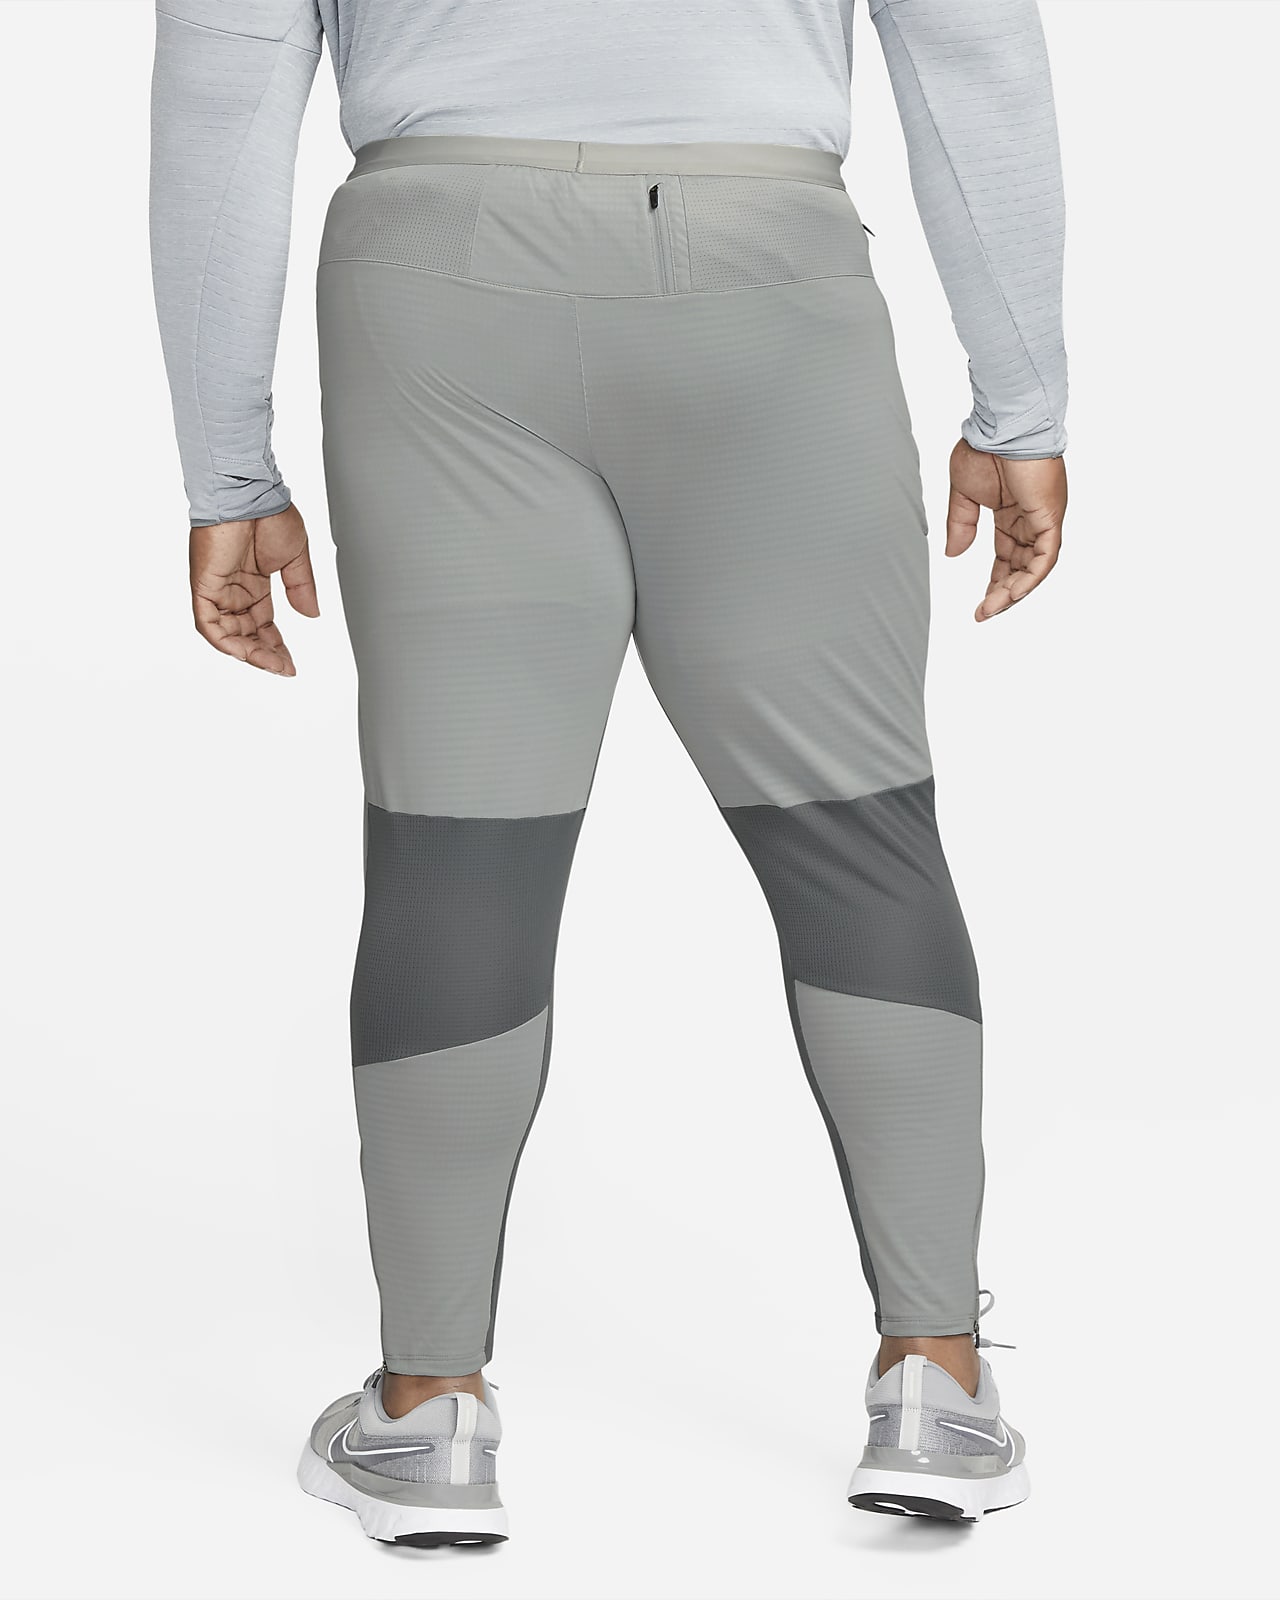 $80 NEW Nike Phenom Elite Men's Training Running Tights Pants